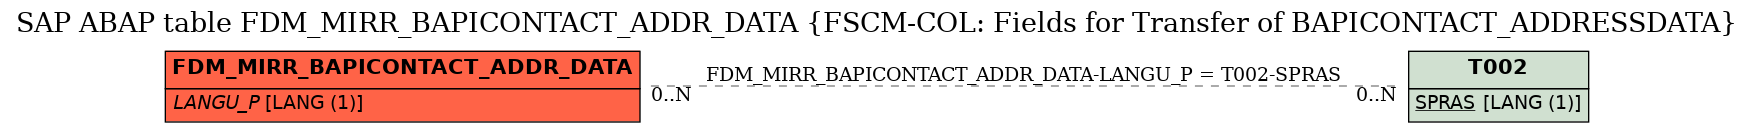 E-R Diagram for table FDM_MIRR_BAPICONTACT_ADDR_DATA (FSCM-COL: Fields for Transfer of BAPICONTACT_ADDRESSDATA)